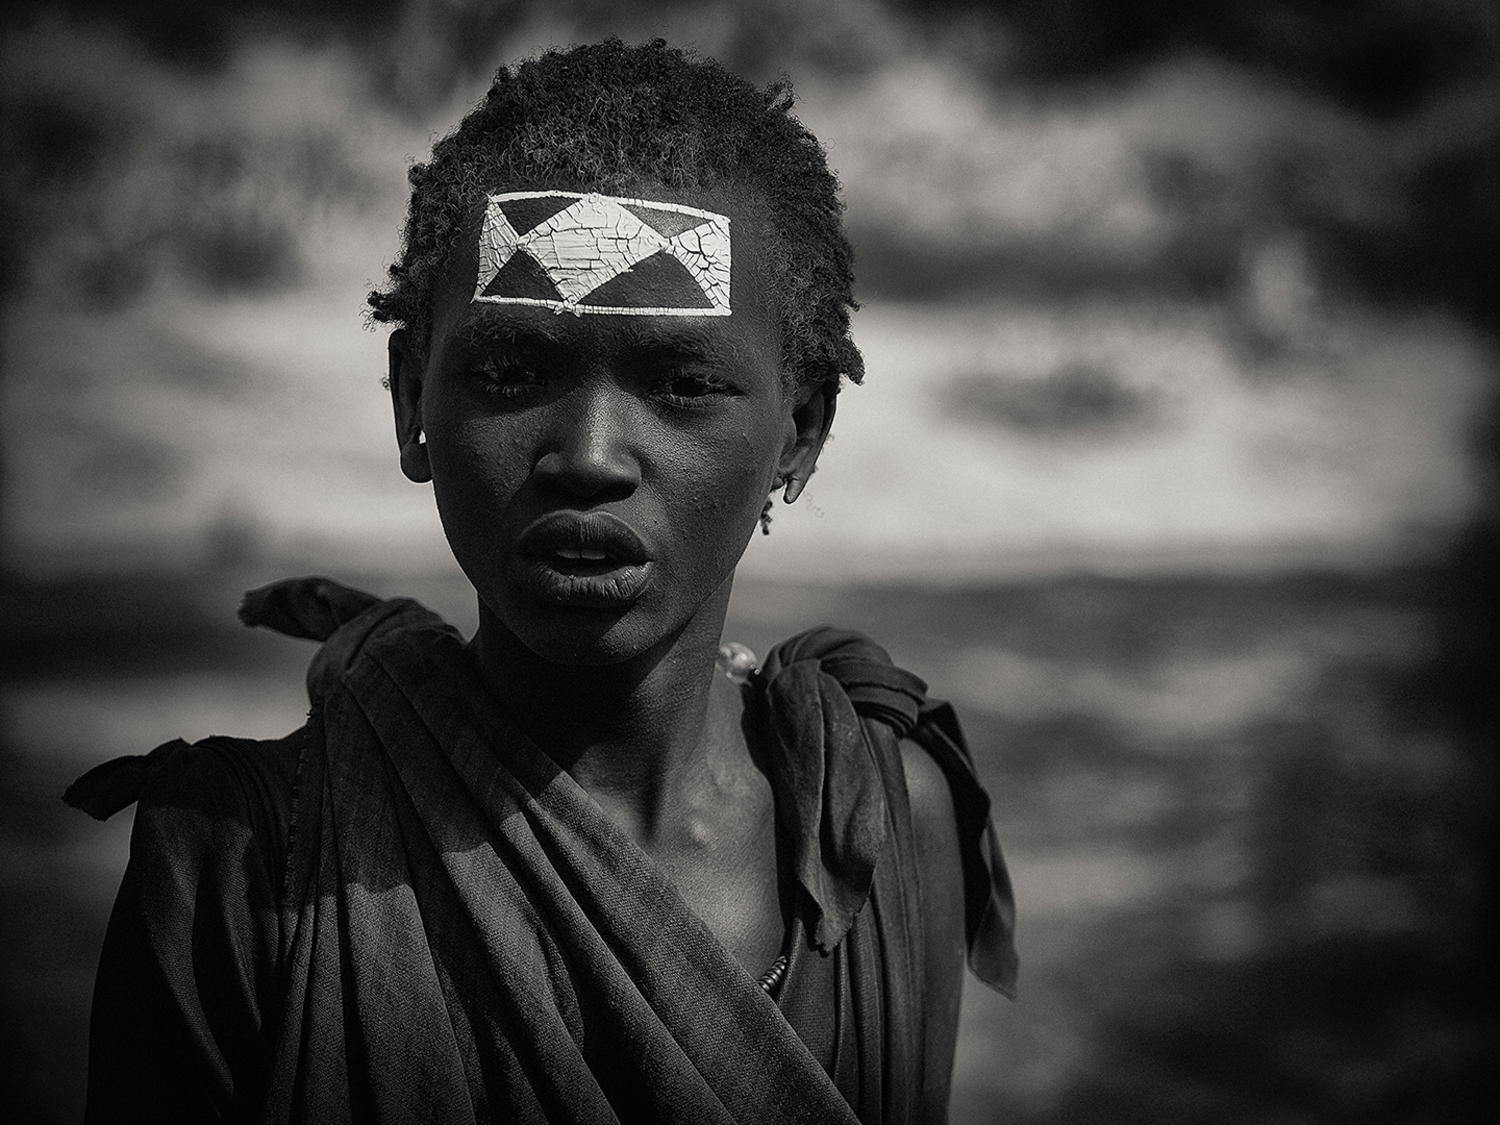 Мальчик племени масаи